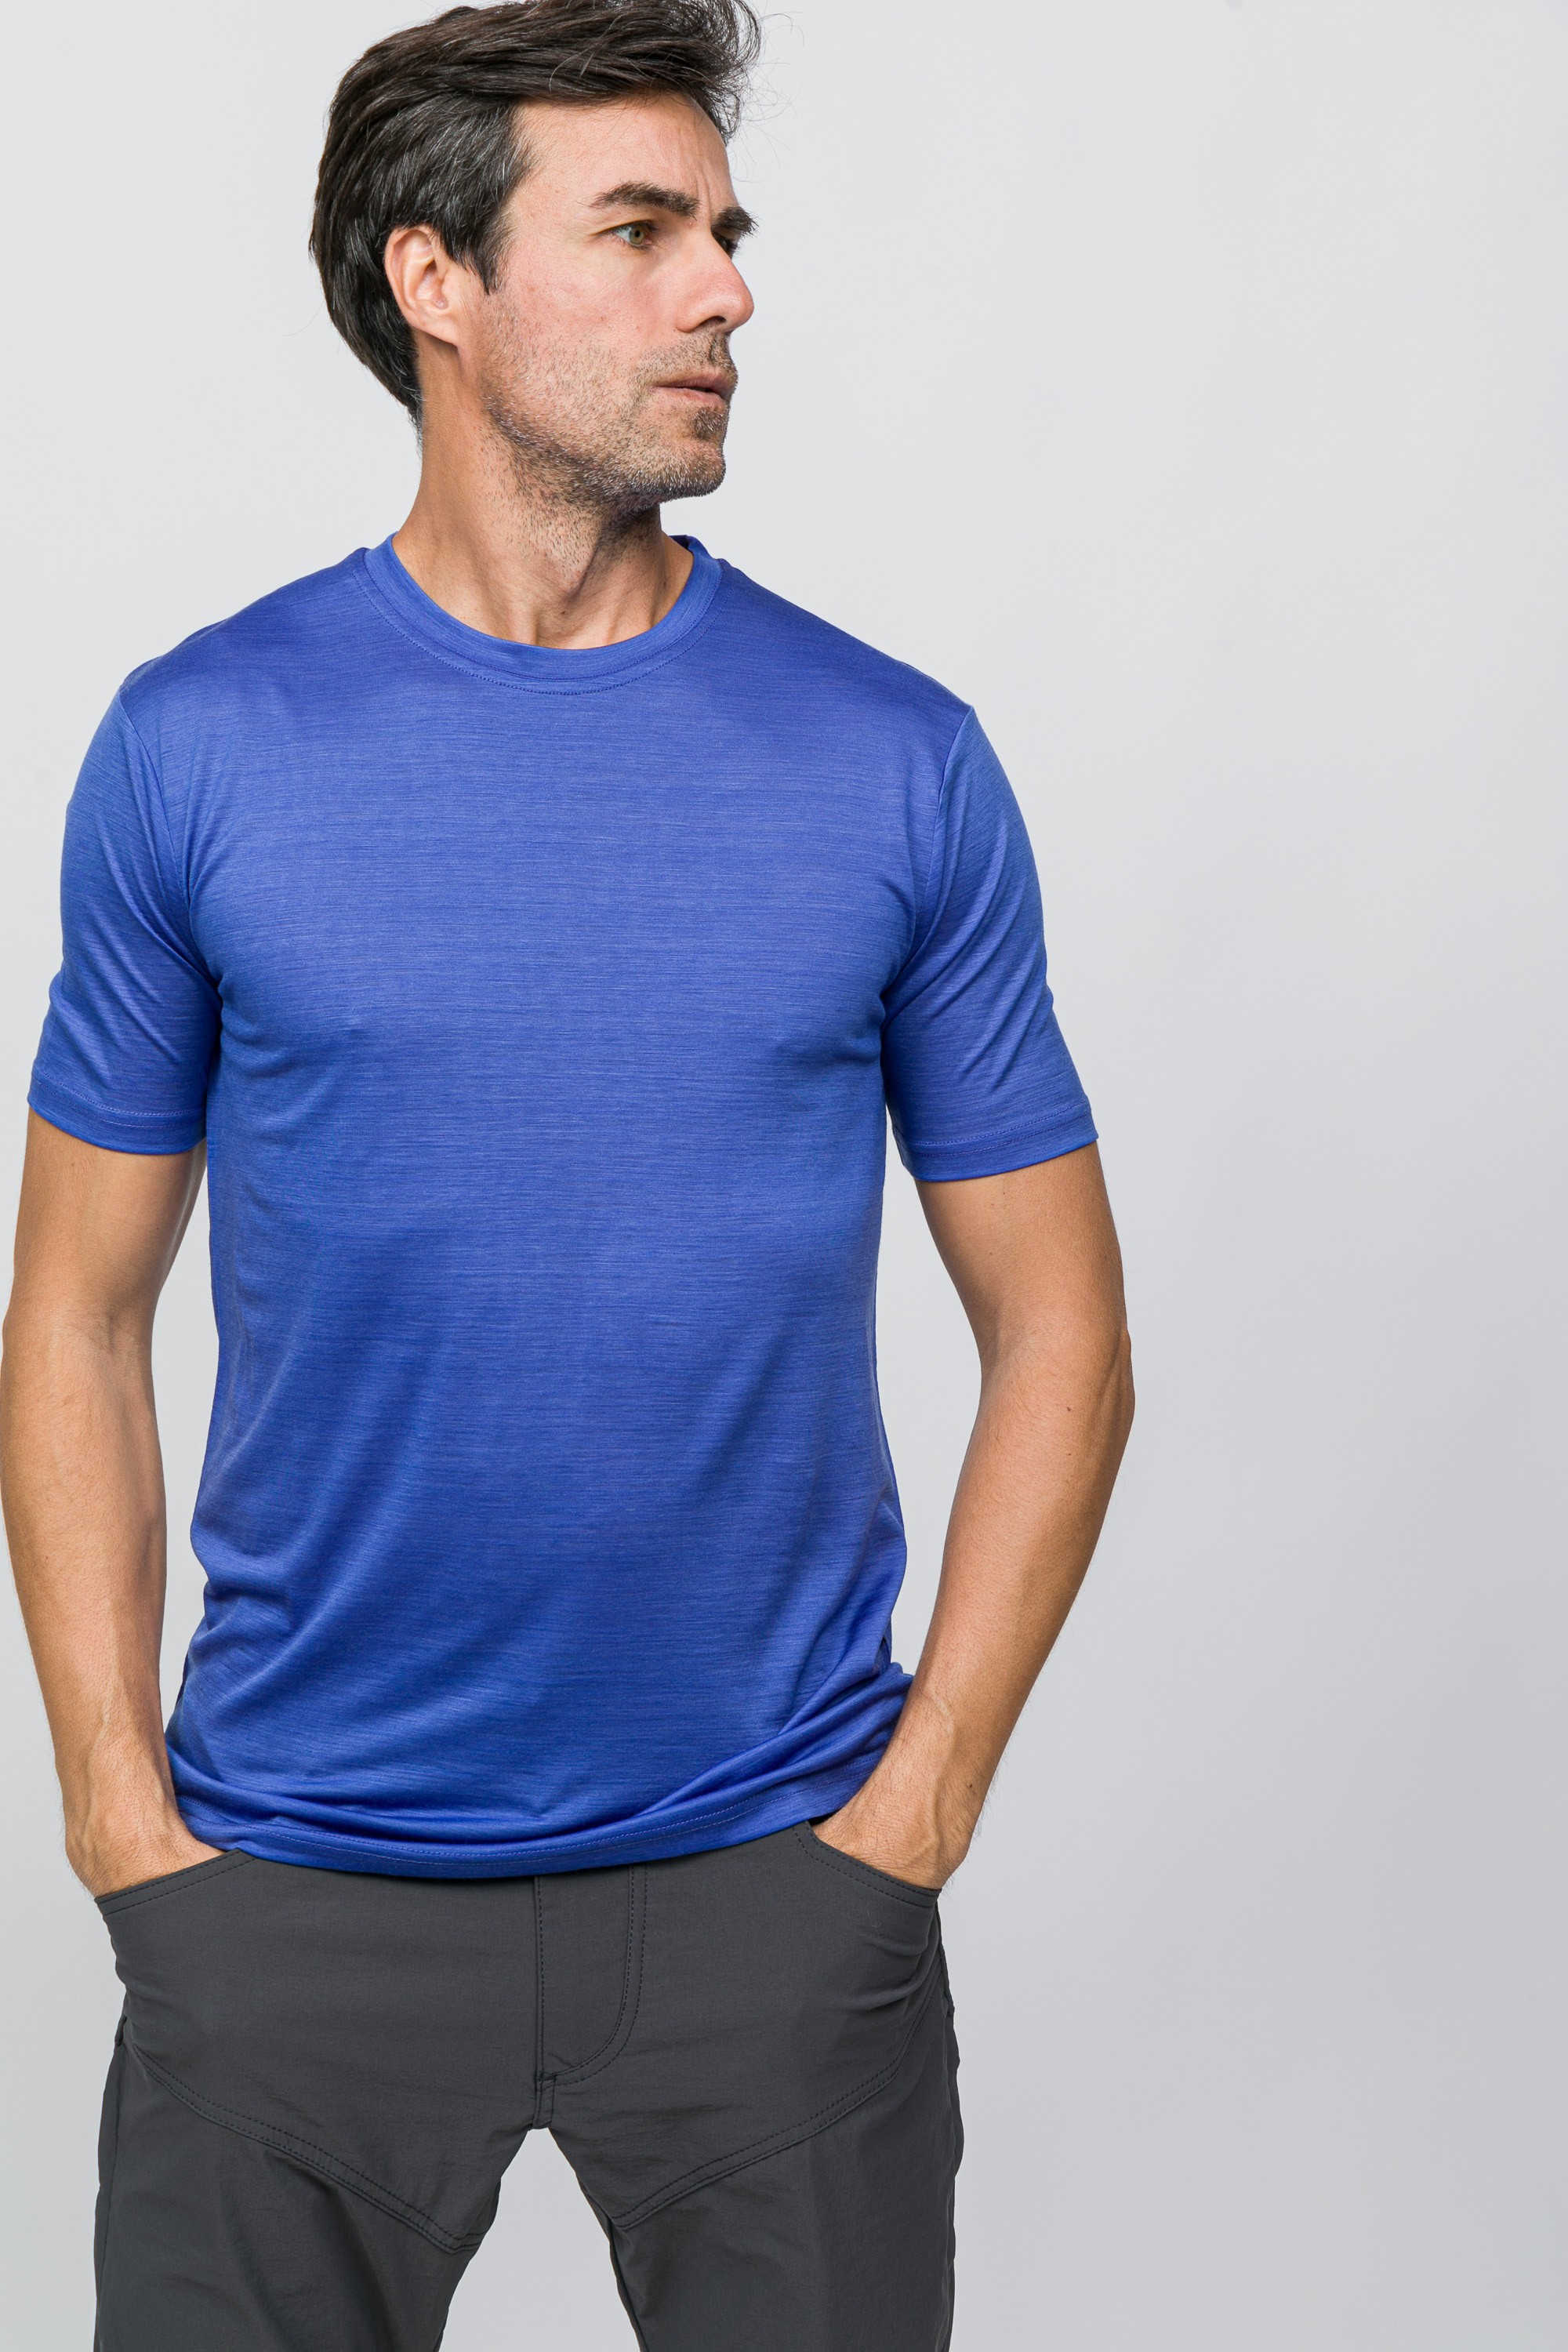 Erkek All-Season Merino T-shirt 135 gr - Mavi